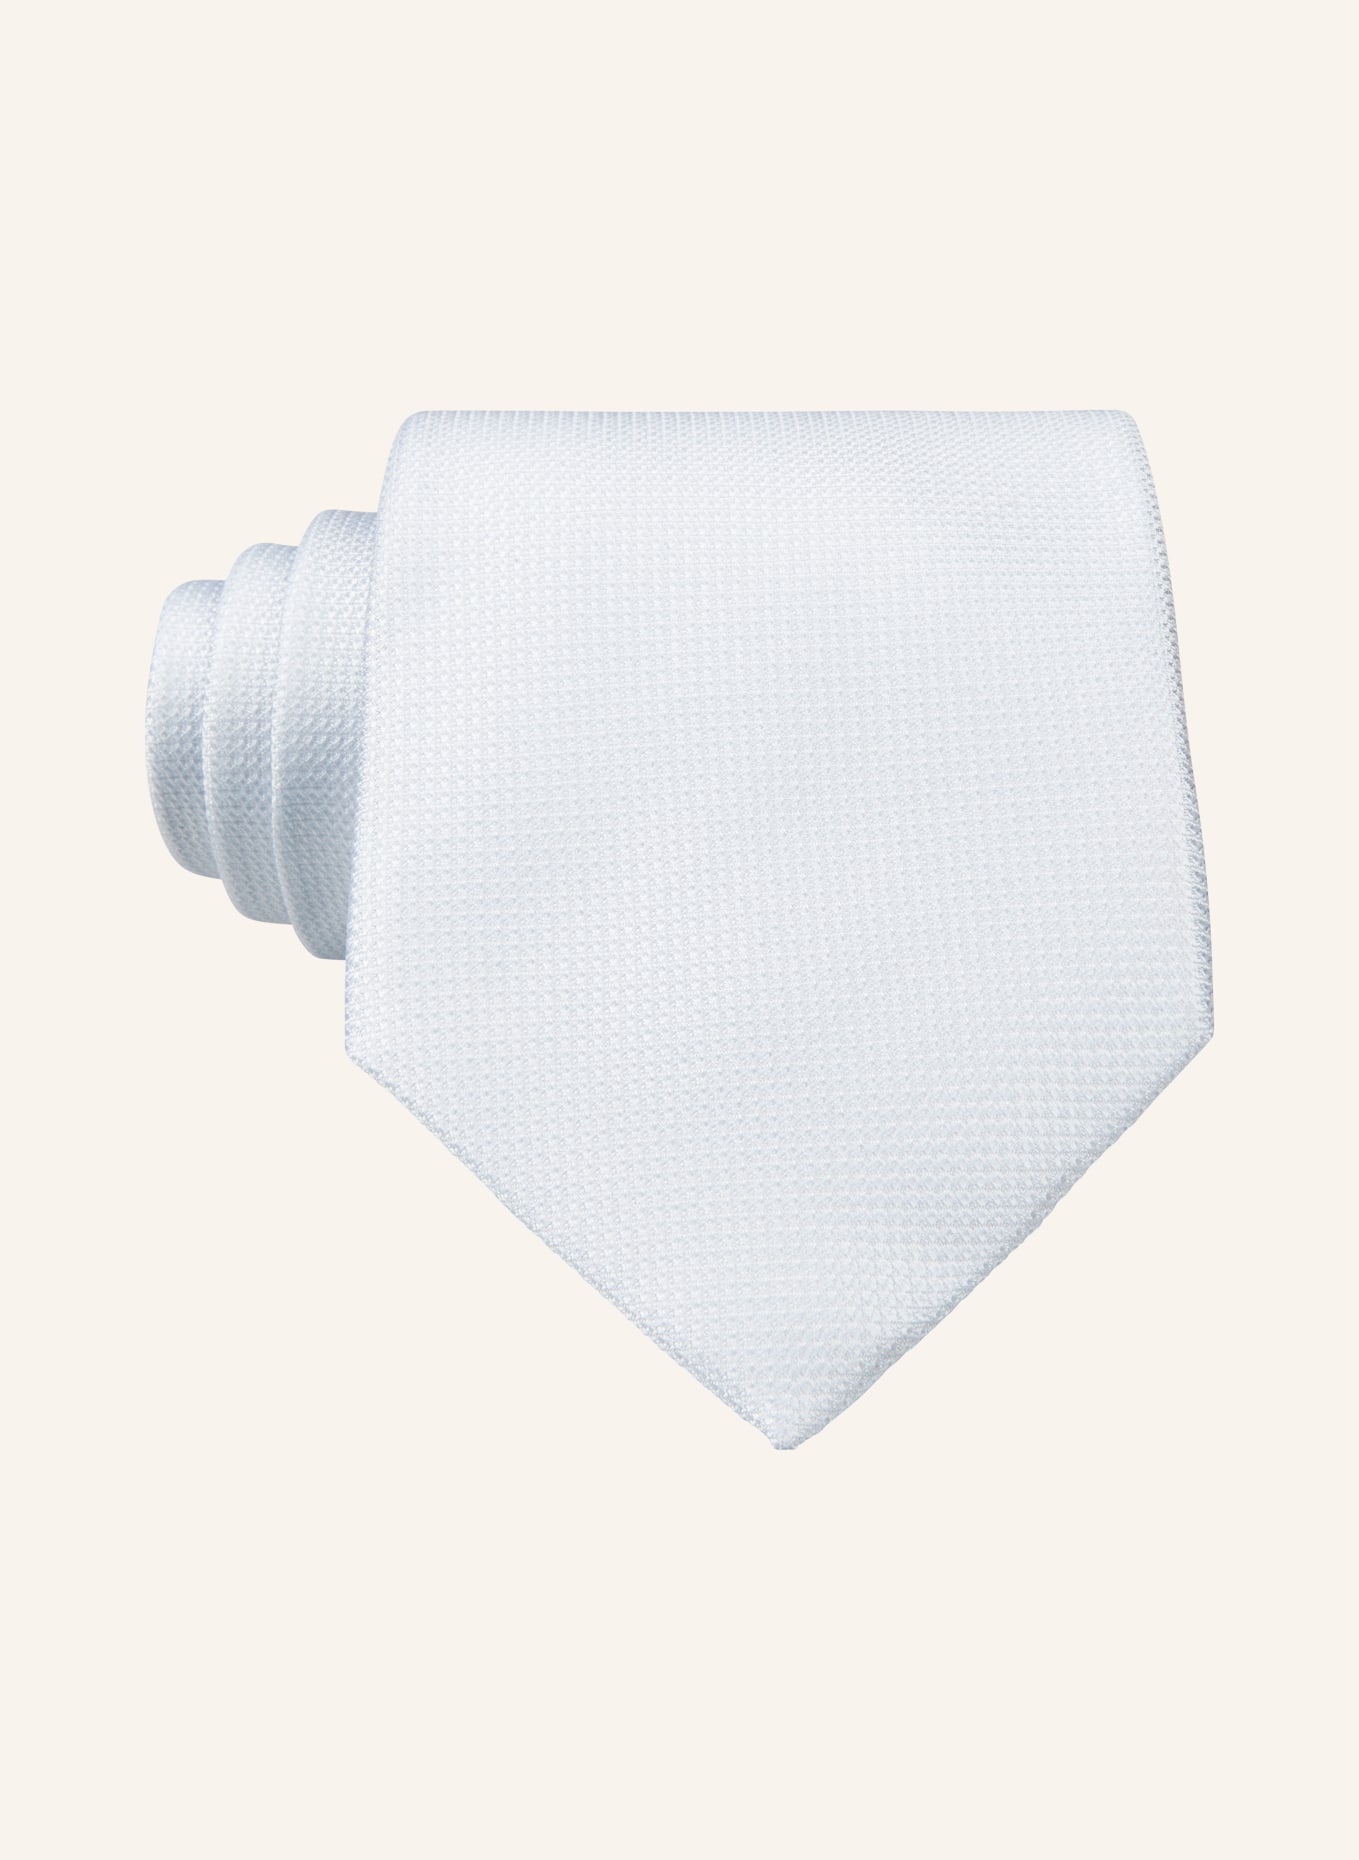 JOOP! Krawatte, Farbe: TÜRKIS(Bild null)